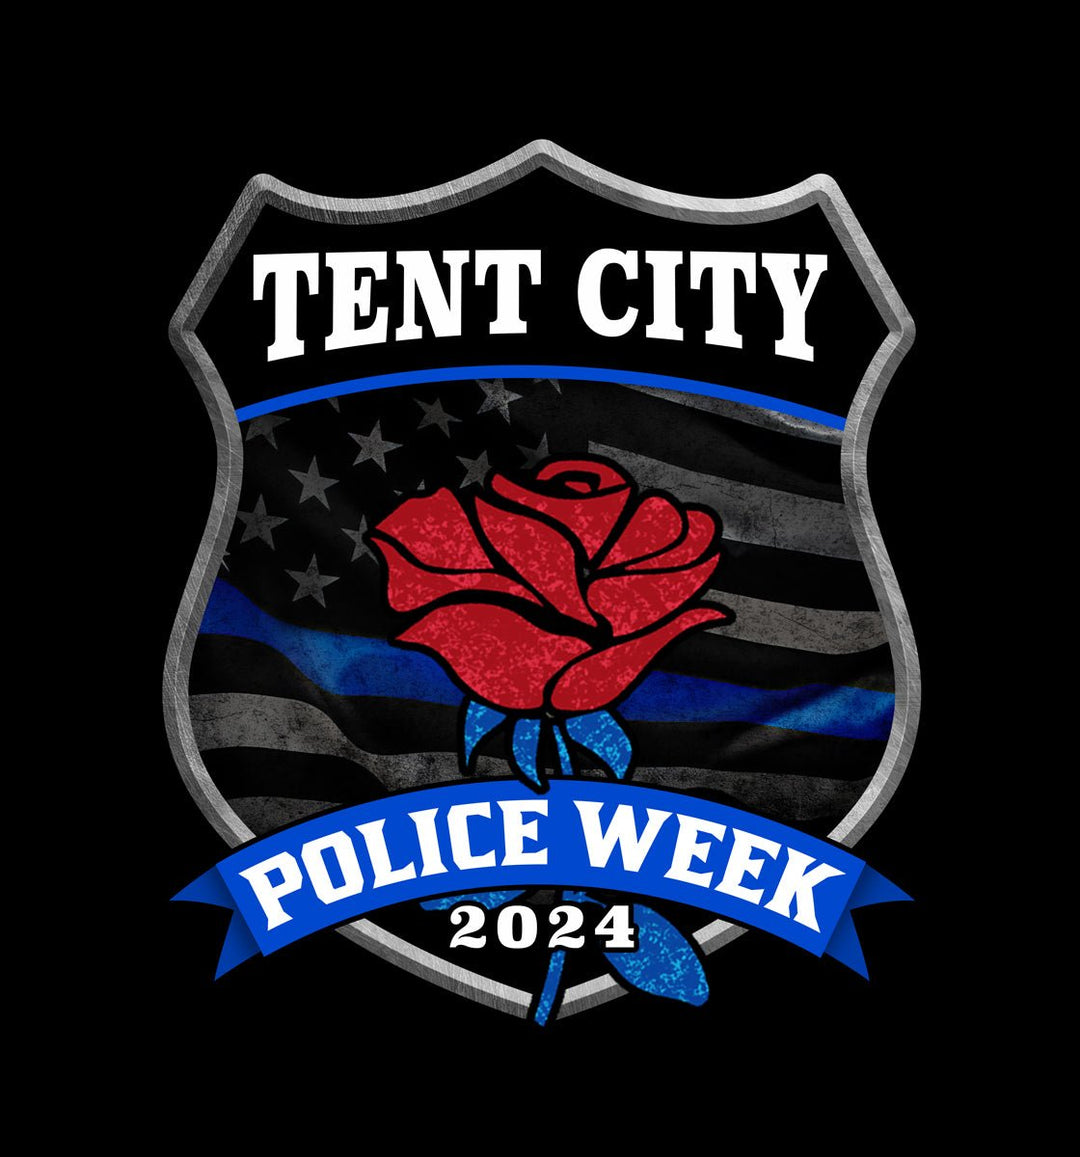 POLICE WEEK 2024 TENT CITY - MIDNIGHT PLATOON